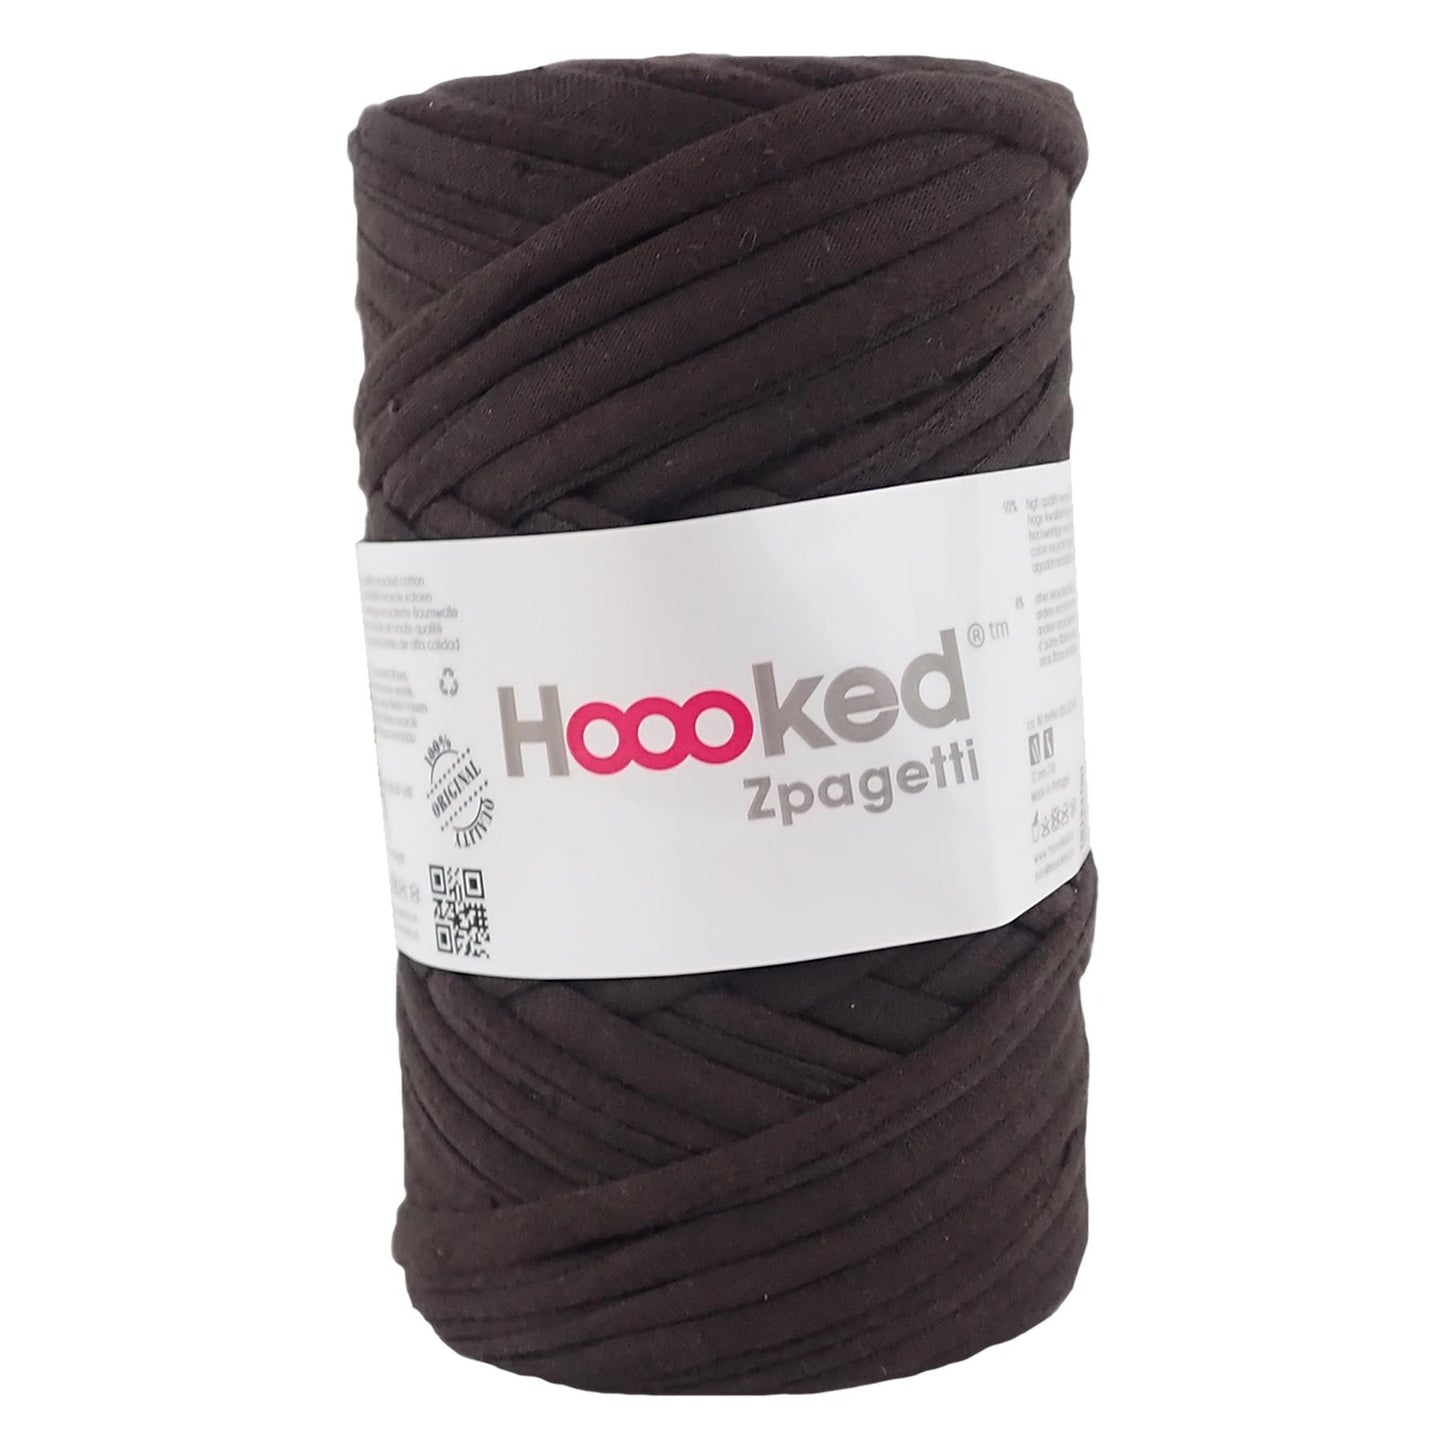 Hoooked Zpagetti Dark Brown Cotton T-Shirt Yarn - 60M 350g